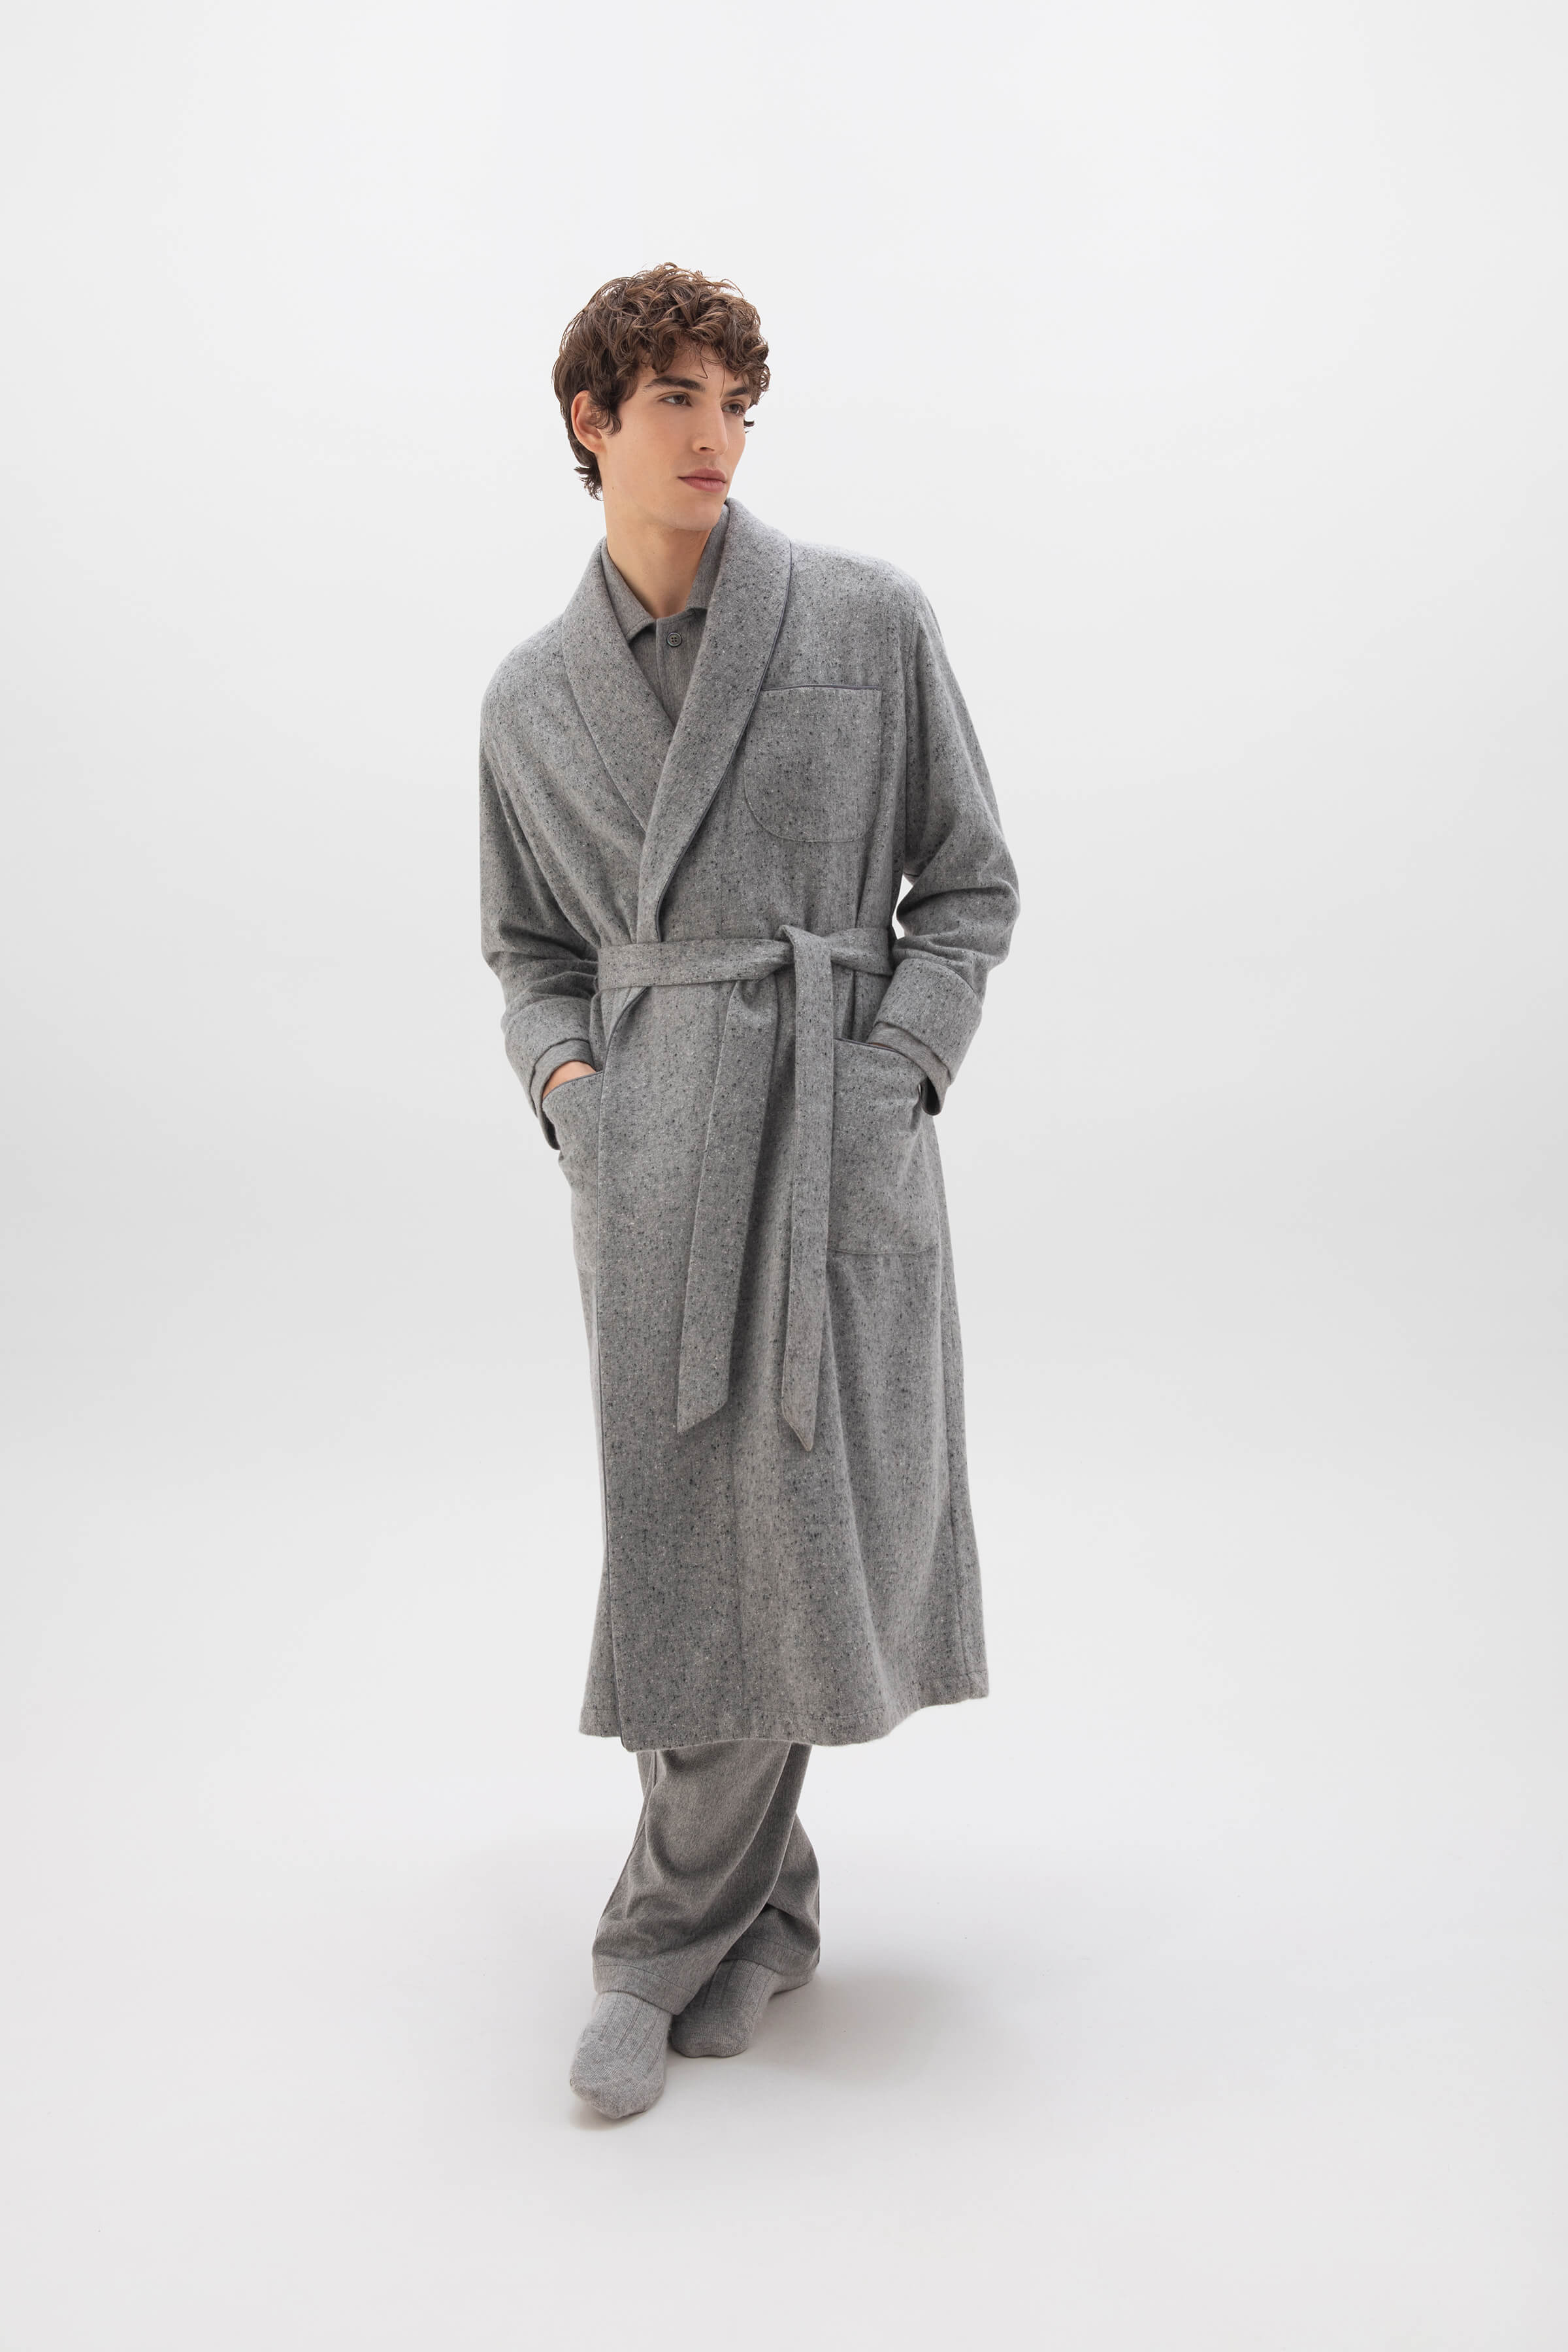 De Bonne Facture x DR Brushed Wool Tweed Cardigan Jacket - Ecru & Grey  Herringbone – Division Road, Inc.